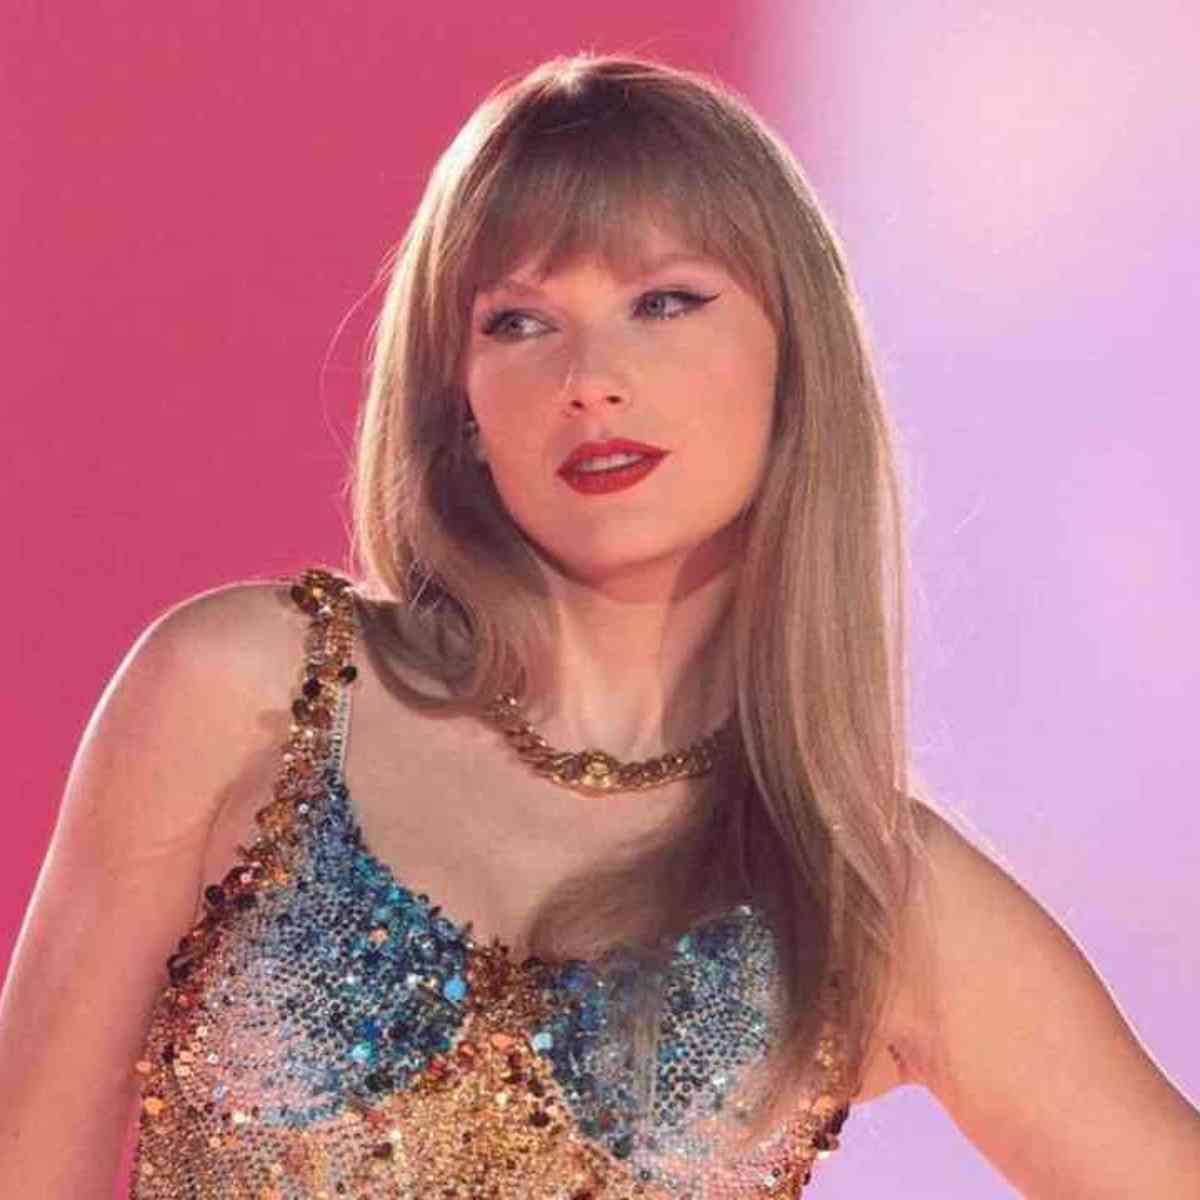 Cruel Summer: Taylor Swift emplaca o 5º hit no Clube do Bilhão do  Spotify - Giz Brasil